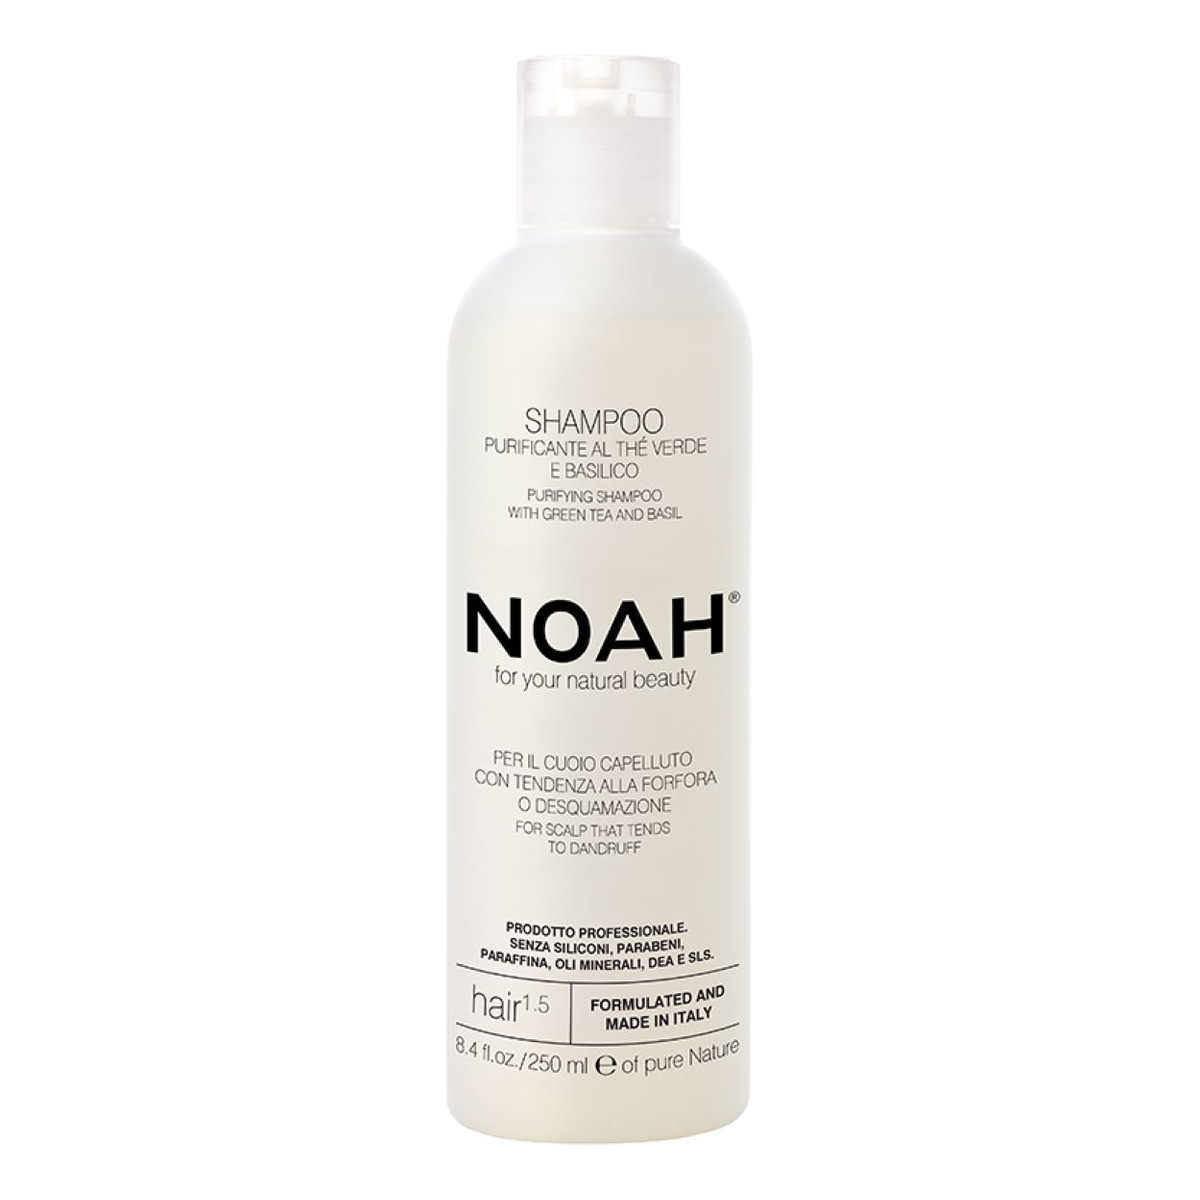 Noah For your natural beauty purifying shampoo hair 1.5 oczyszczający szampon do włosów green tea & basil 250ml